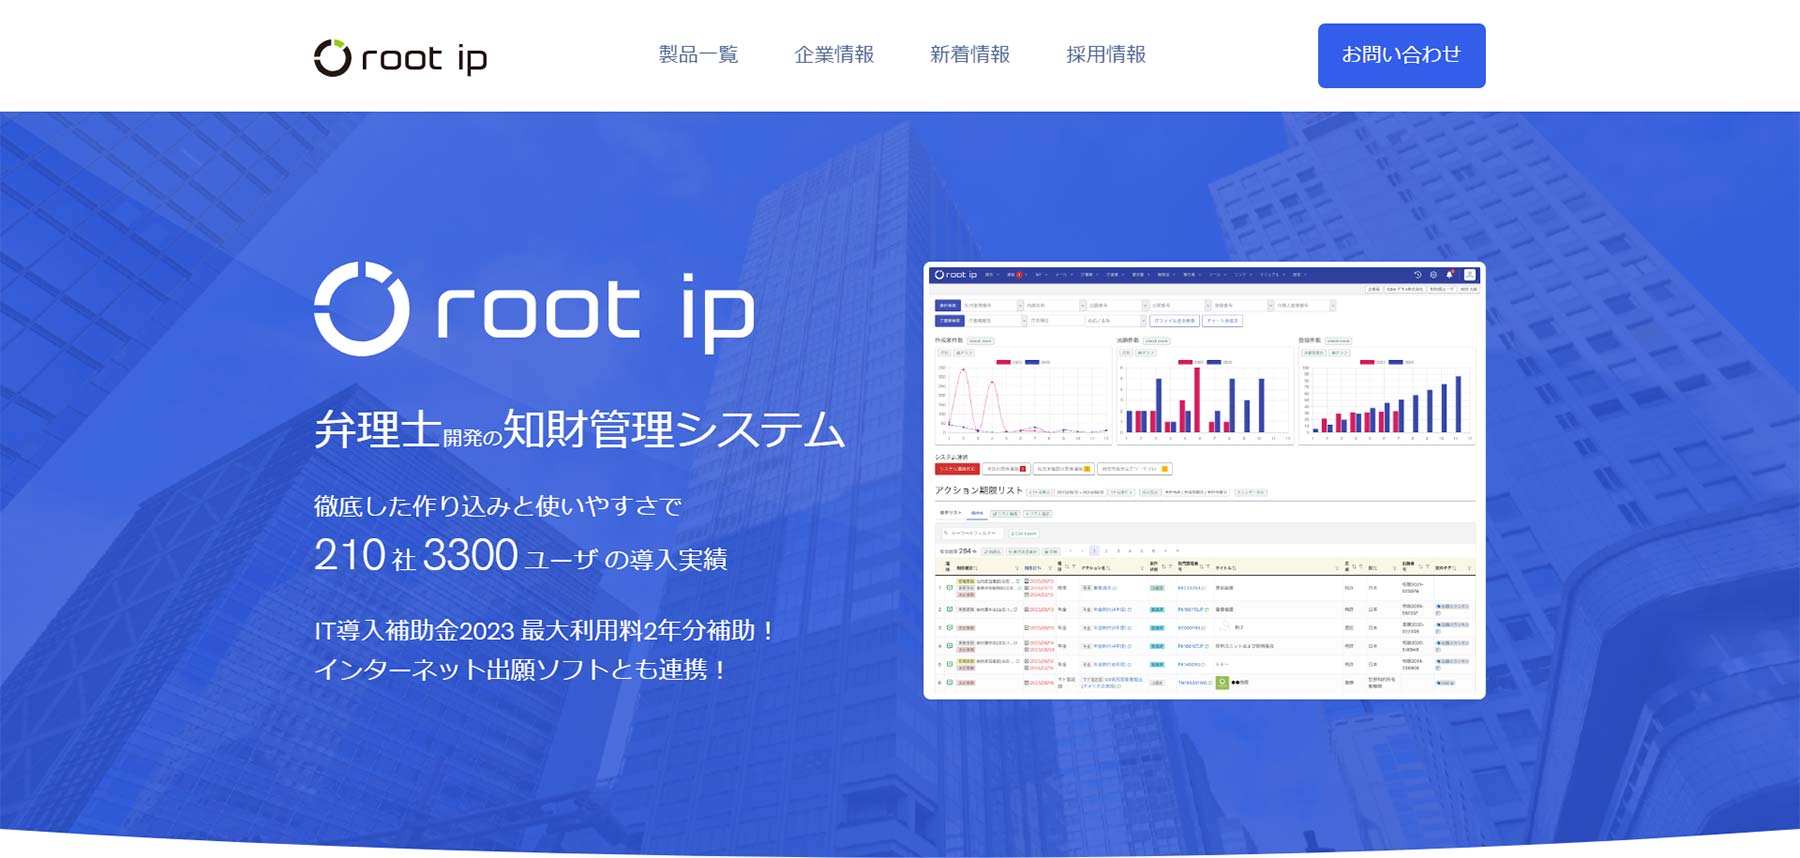 root ip公式Webサイト